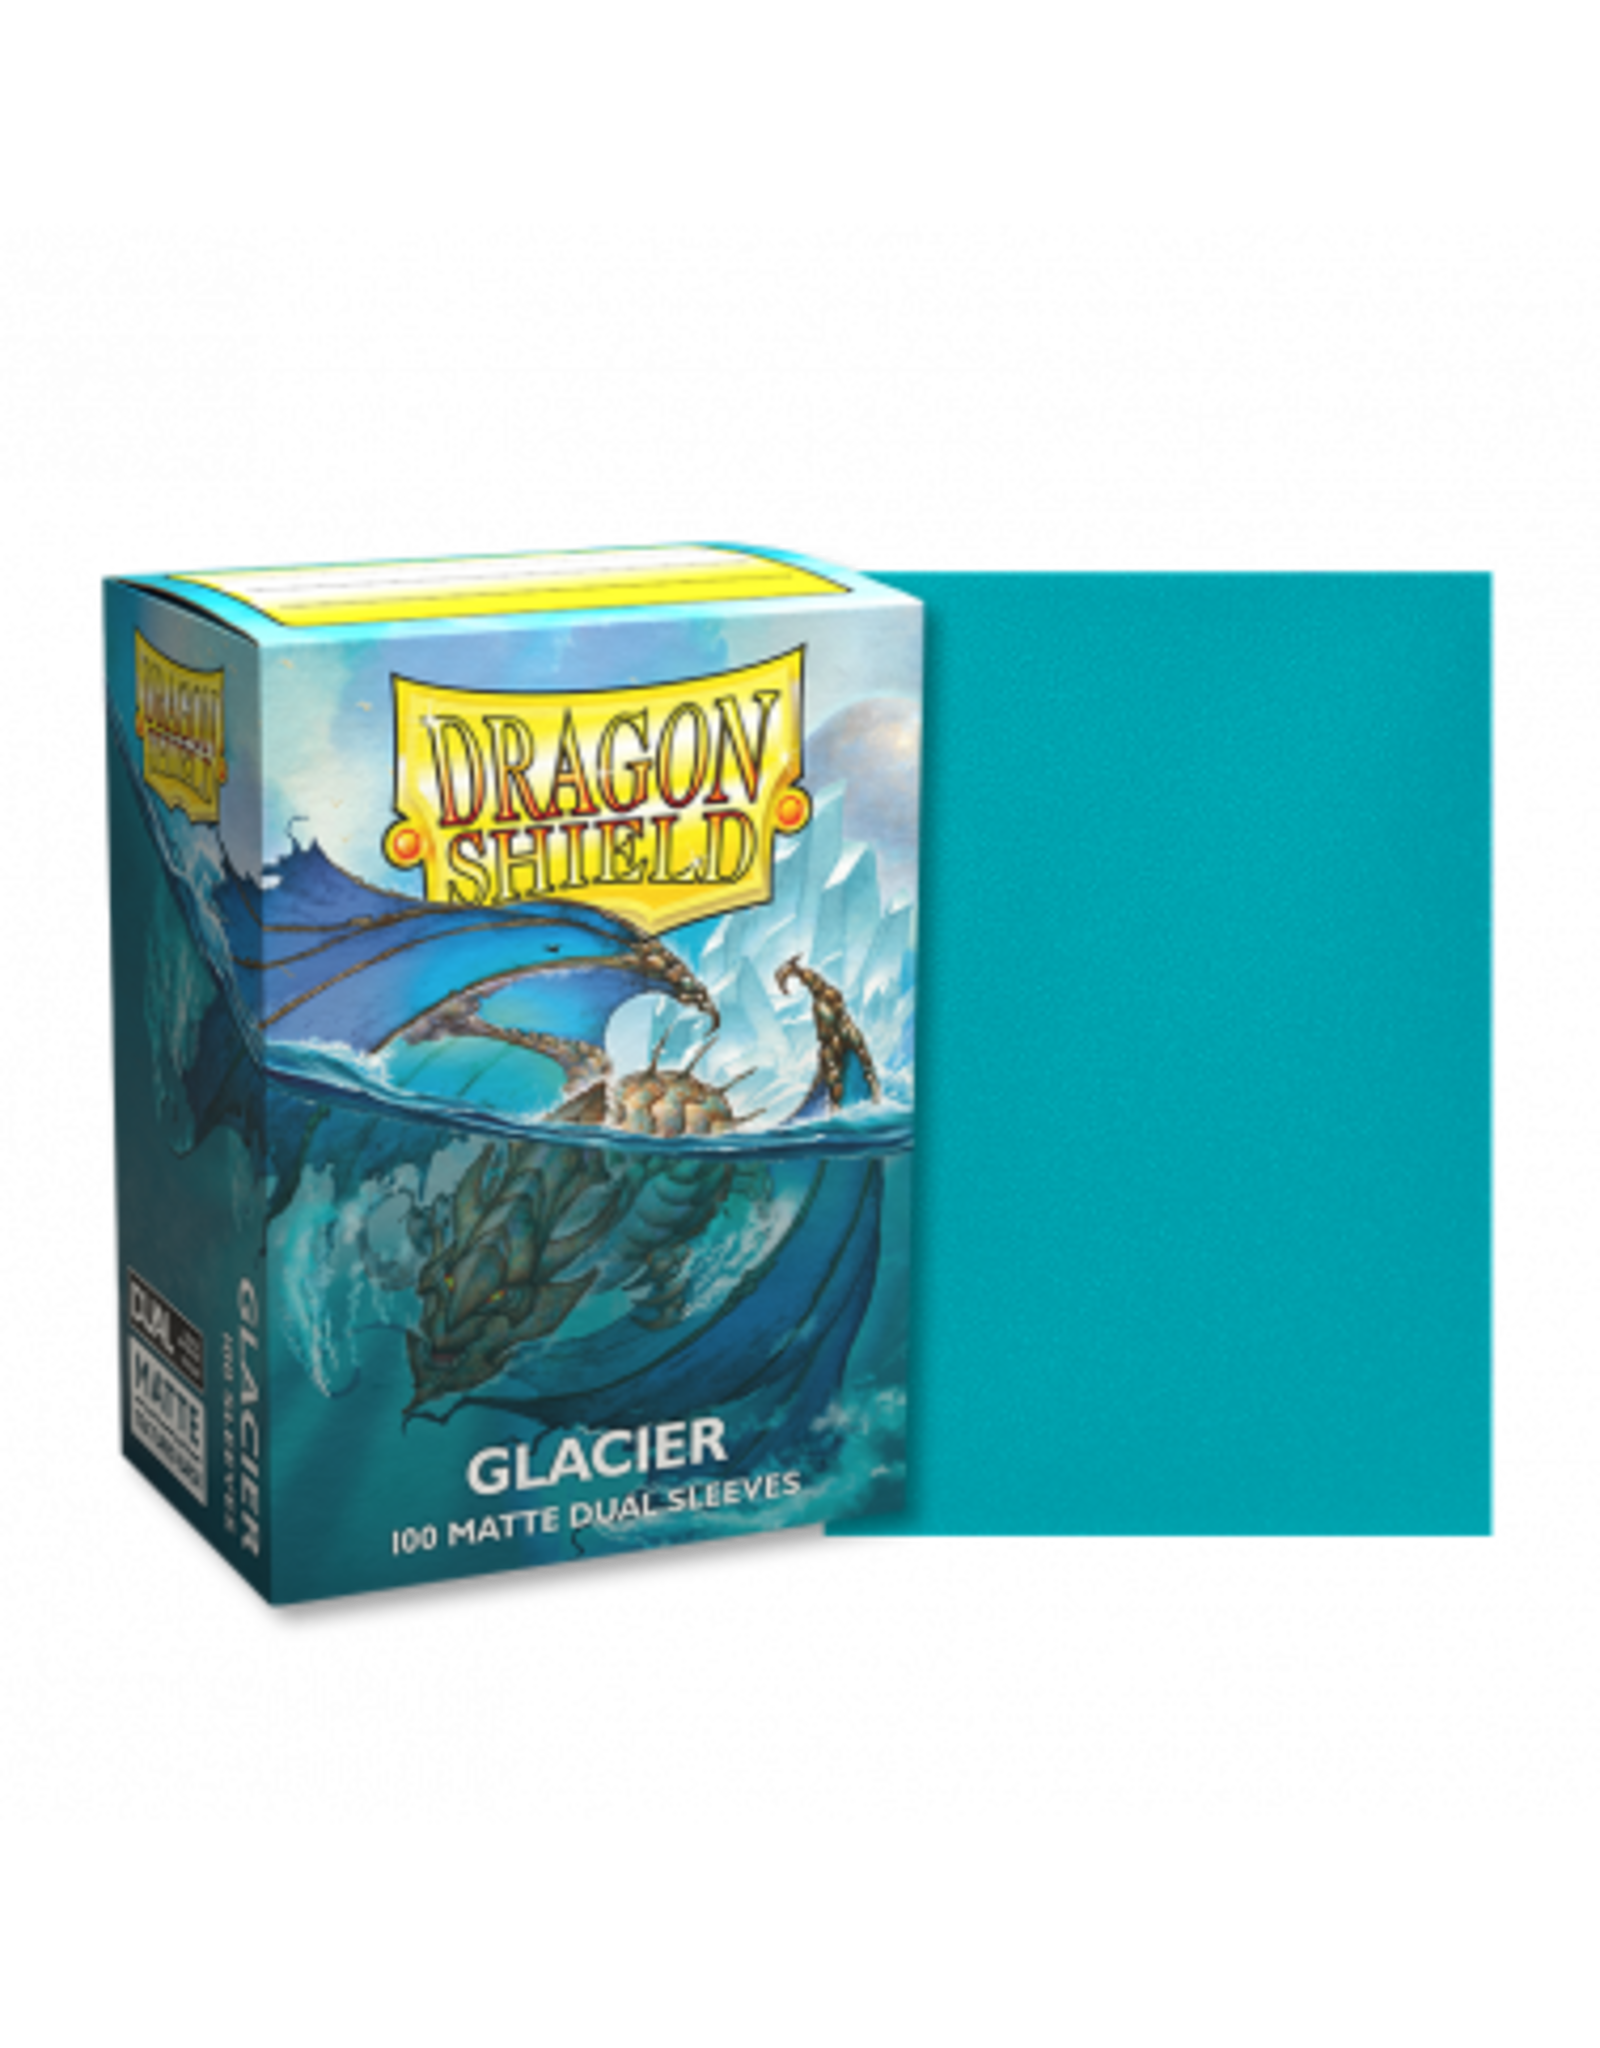 Dragon Shields Dragon Shield 100ct Matte Dual Sleeves - Glacier